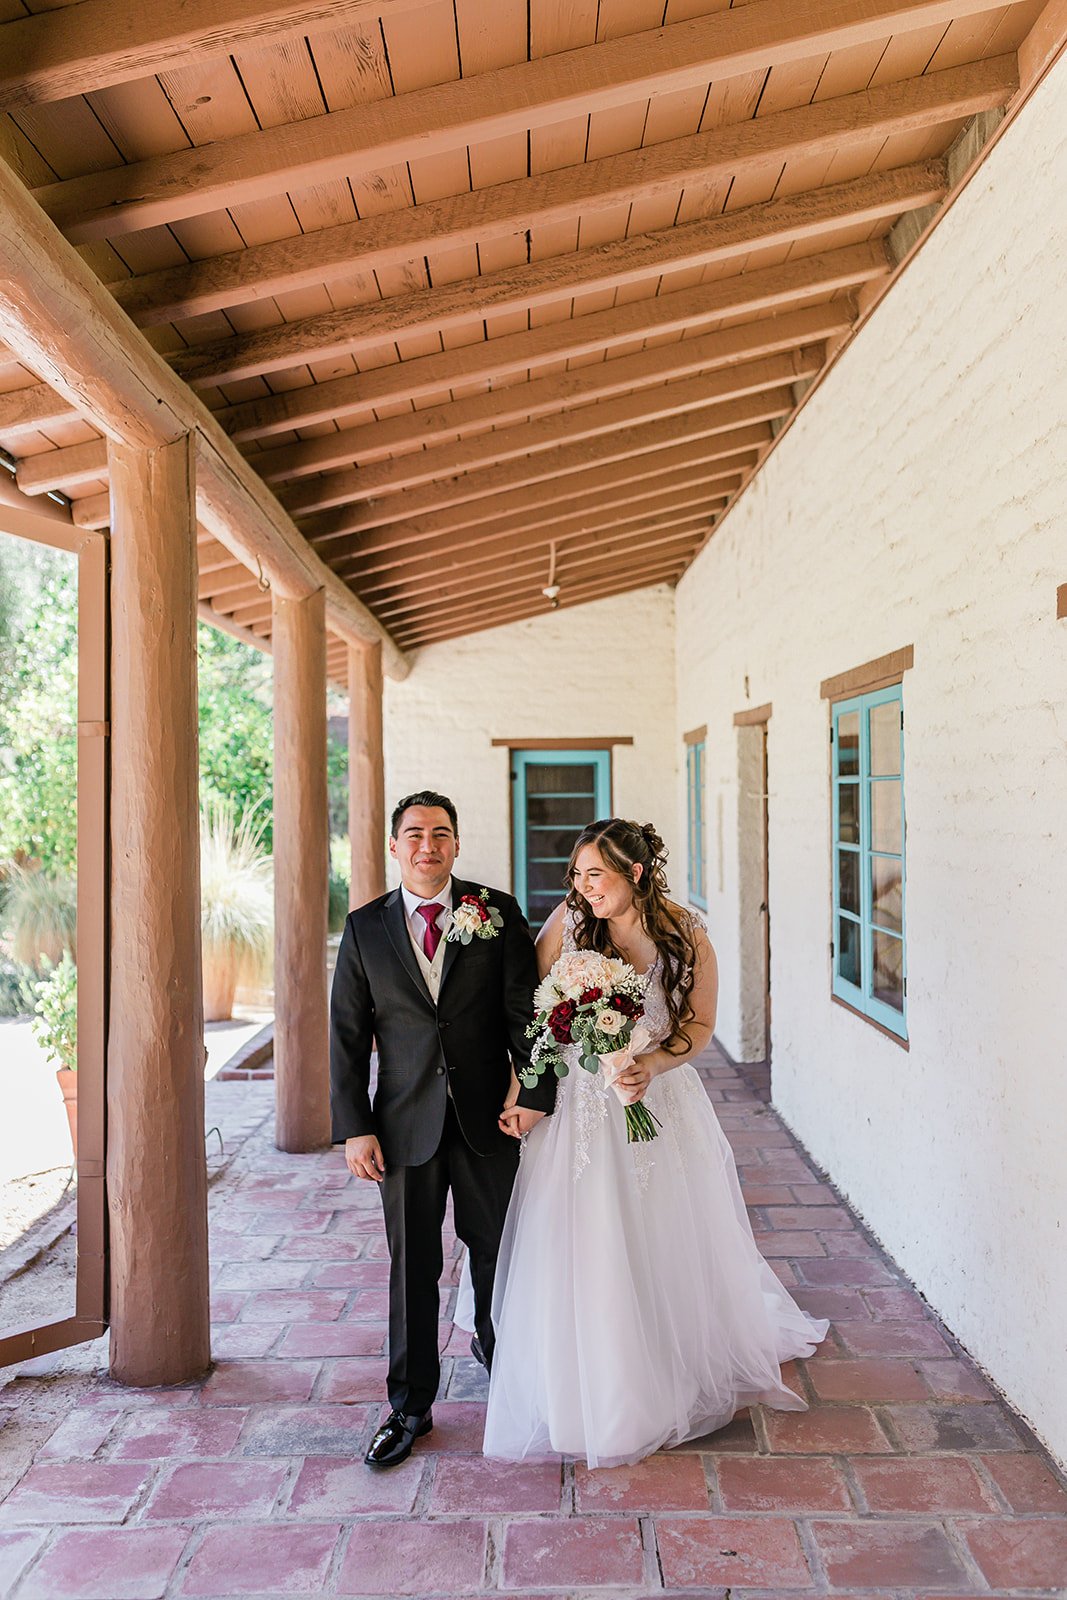 Wedding day portraits at Tesoro Adobe Historic Park in Santa Clarita